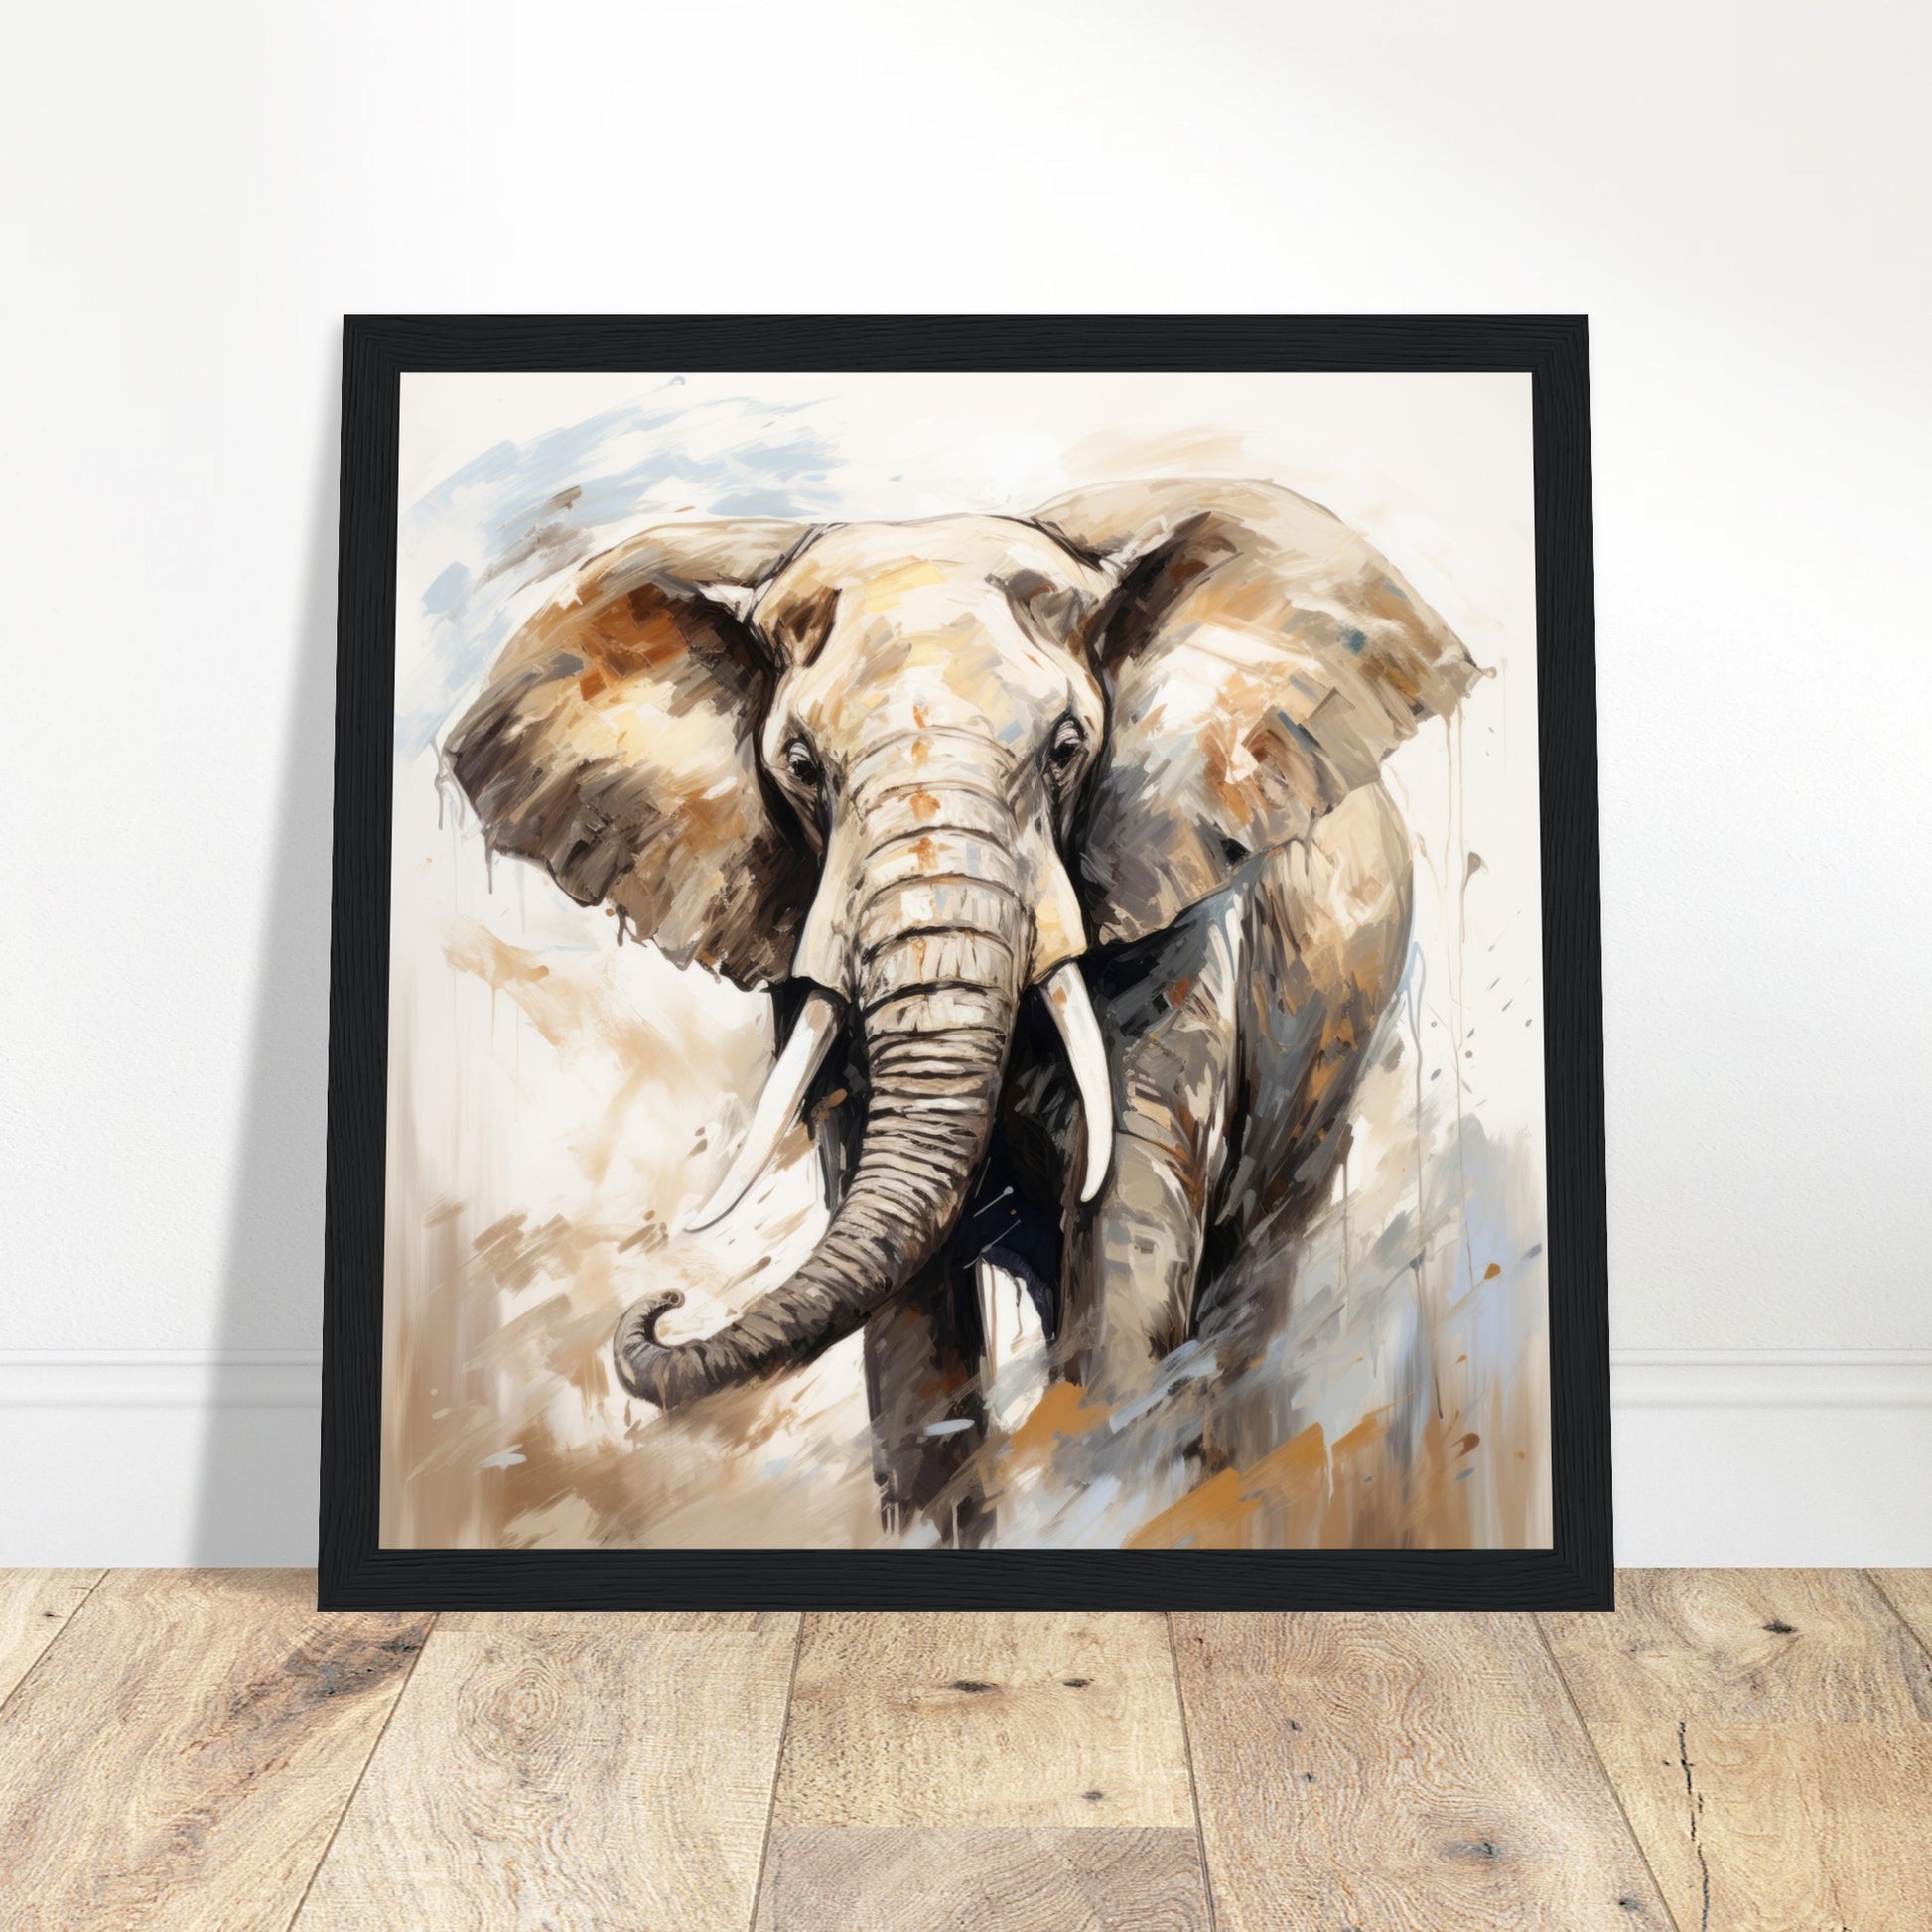 Elephant Giants Artwork - Print Room Ltd Black frame 70x70 cm / 28x28"